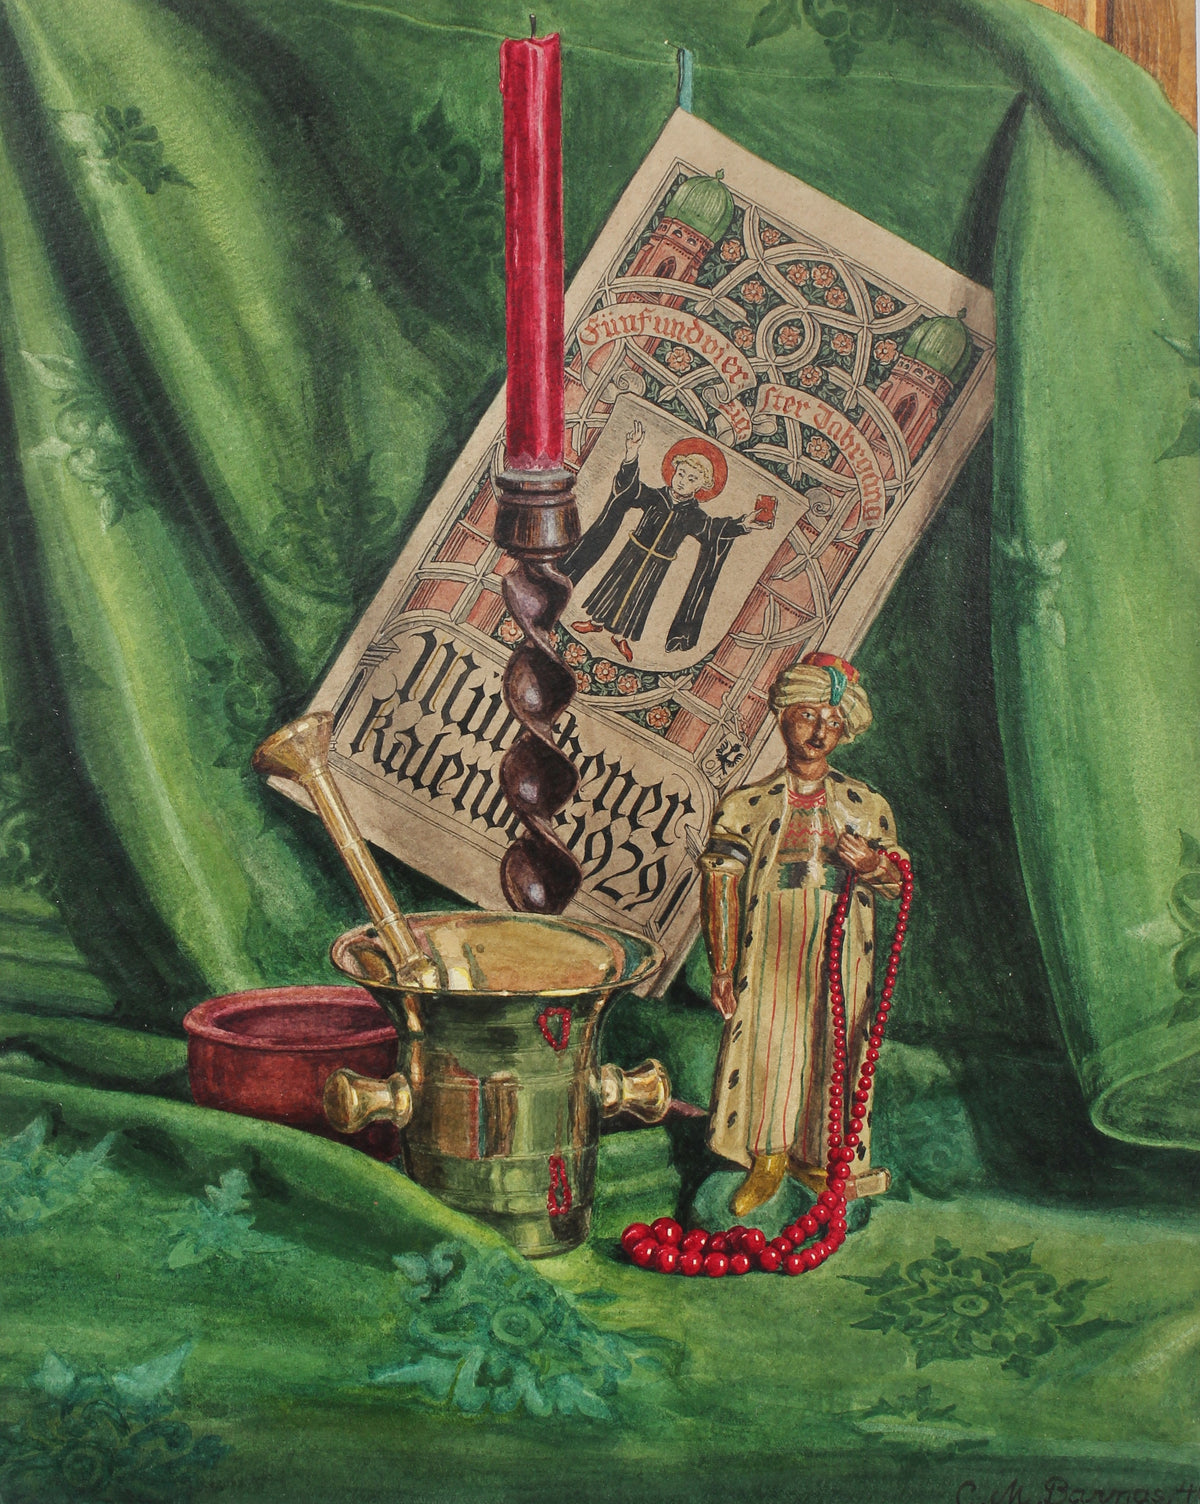 Still Life with Candlestick &amp; Statuette&lt;br&gt;1940 Oil on Paper&lt;br&gt;&lt;br&gt;#98624